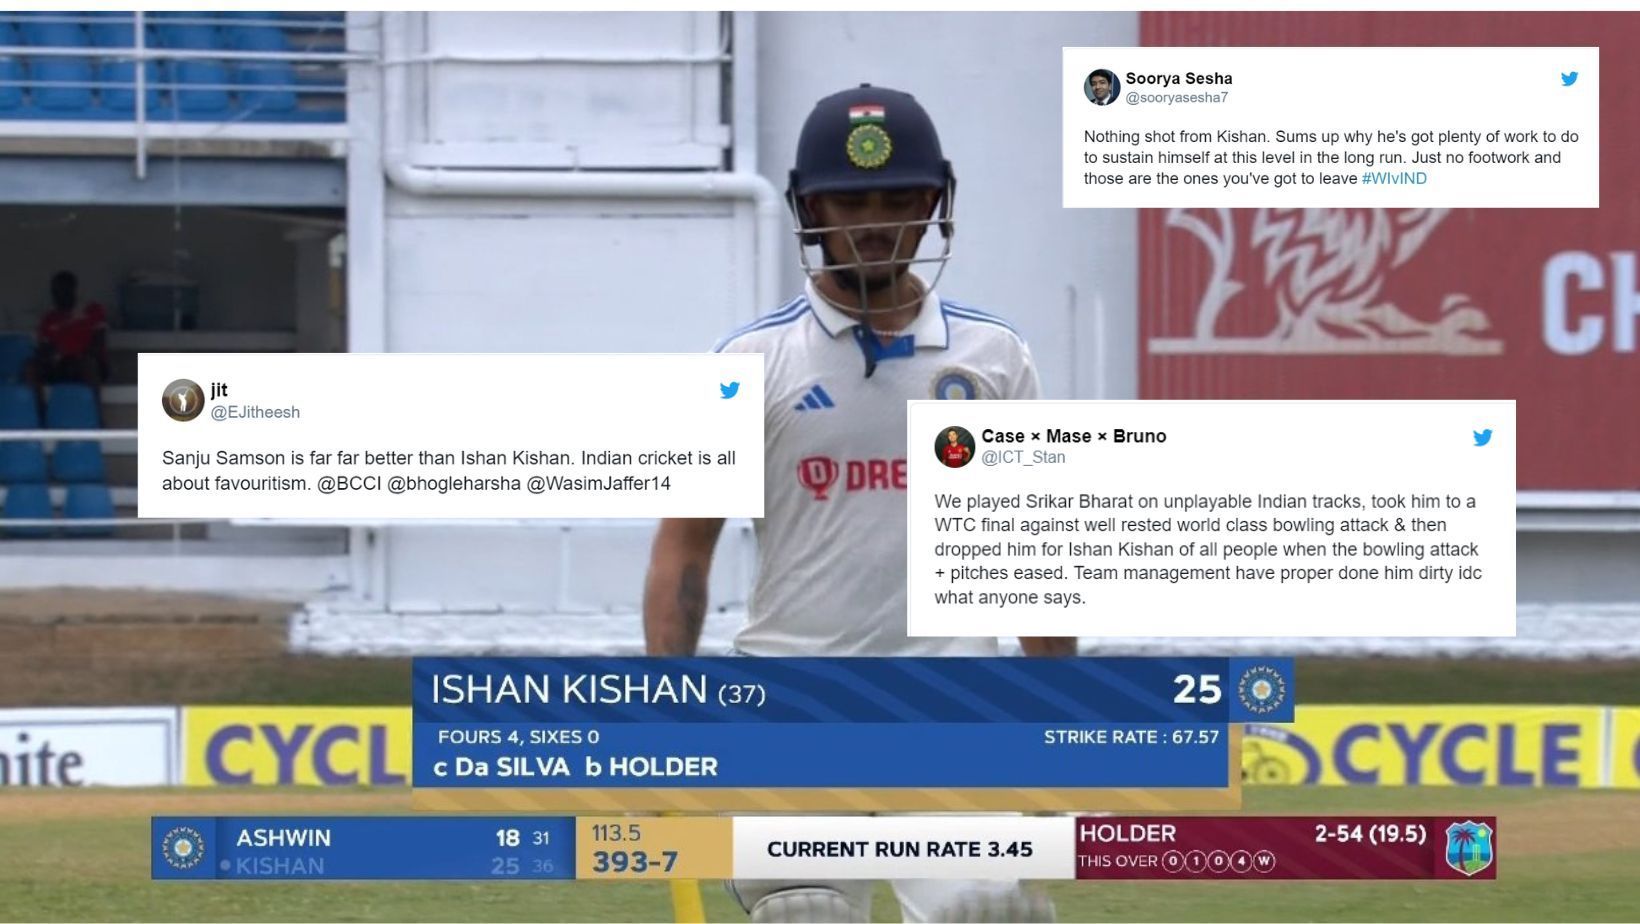 Twitter reactions to Ishan Kishan